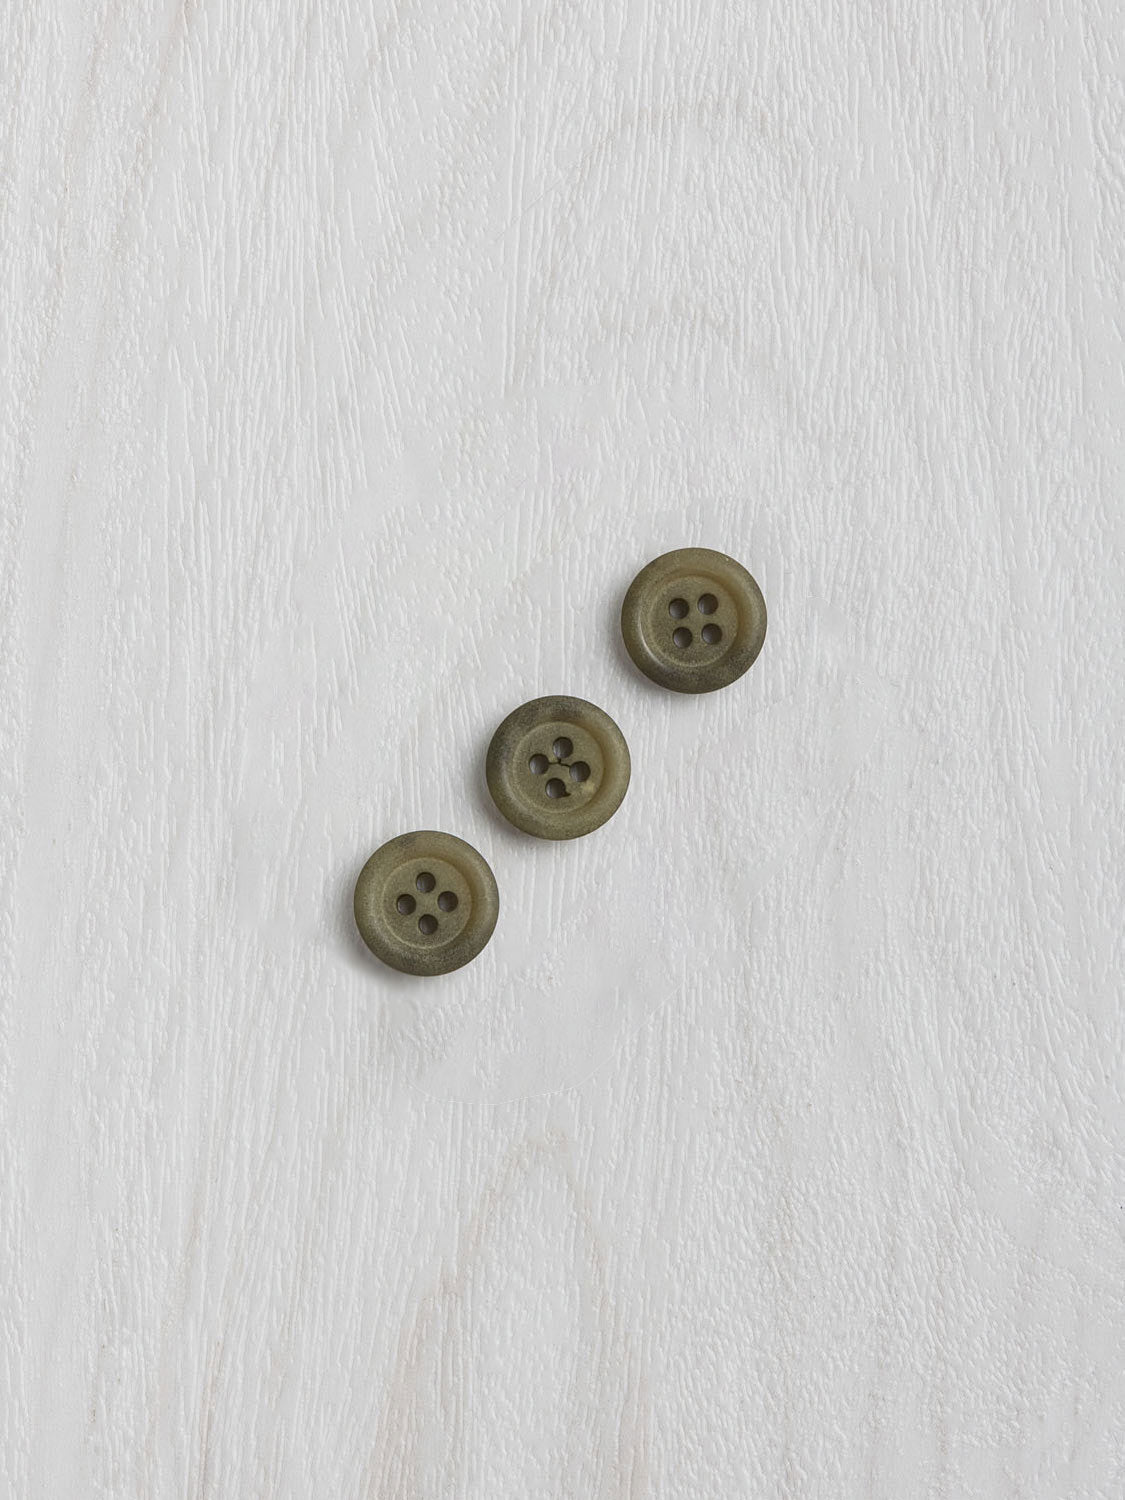 Recycled-Paper-16mm-3-Buttons-khaki-Core-Fabrics.jpg